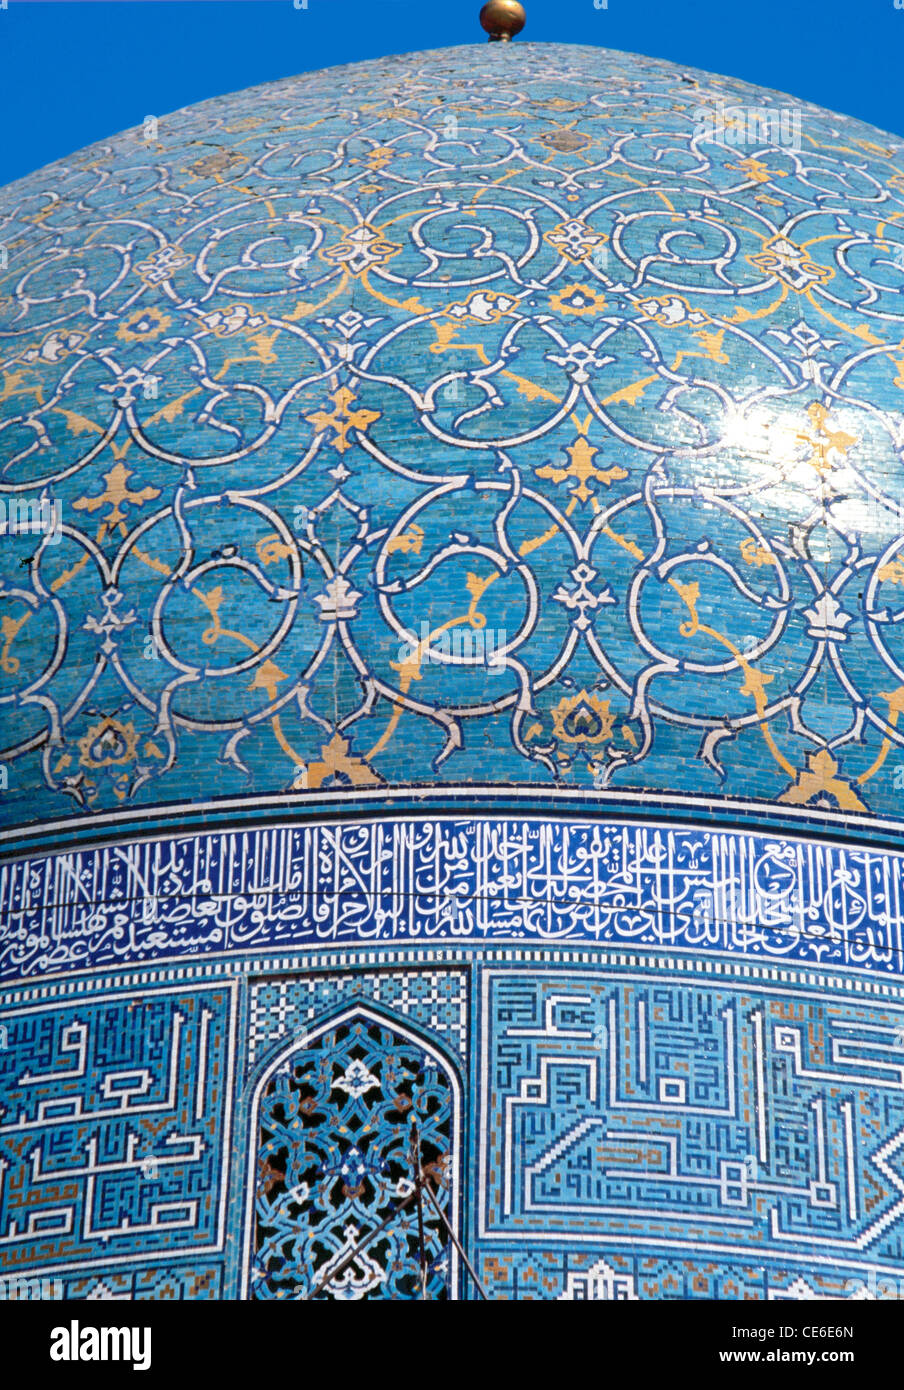 Islamic Art. Safavid period. Imam Mosque or Great Mosque (Masjed-e-Imam).  Isfahan. Islamic Republic of Iran. Stock Photo